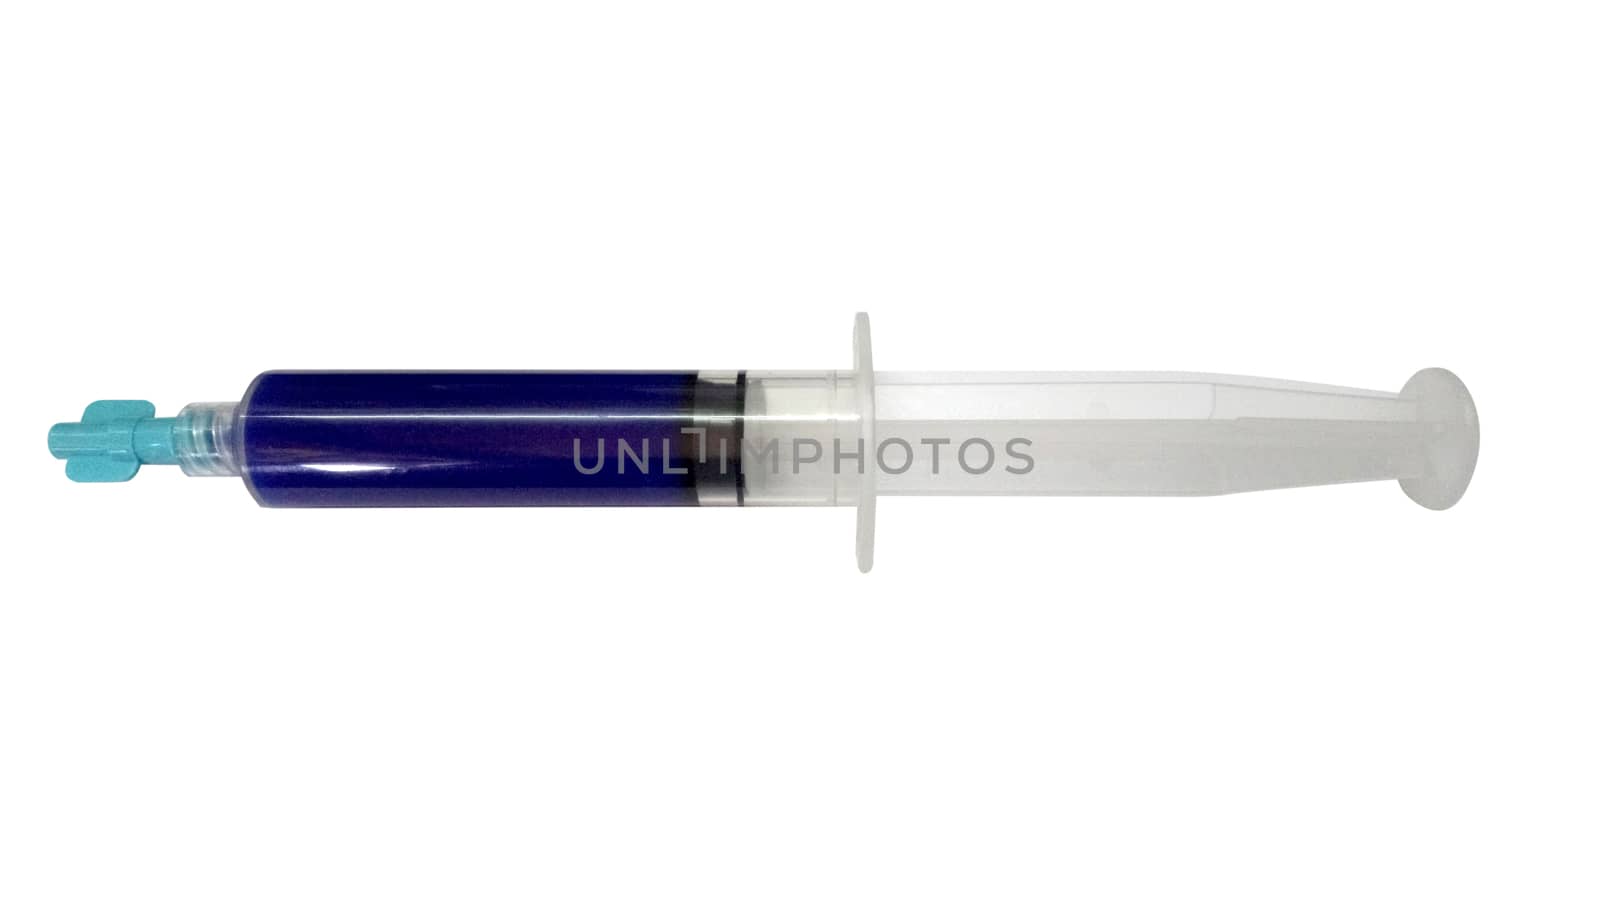 Phosphoric acid etching gel syringe by imwaltersy